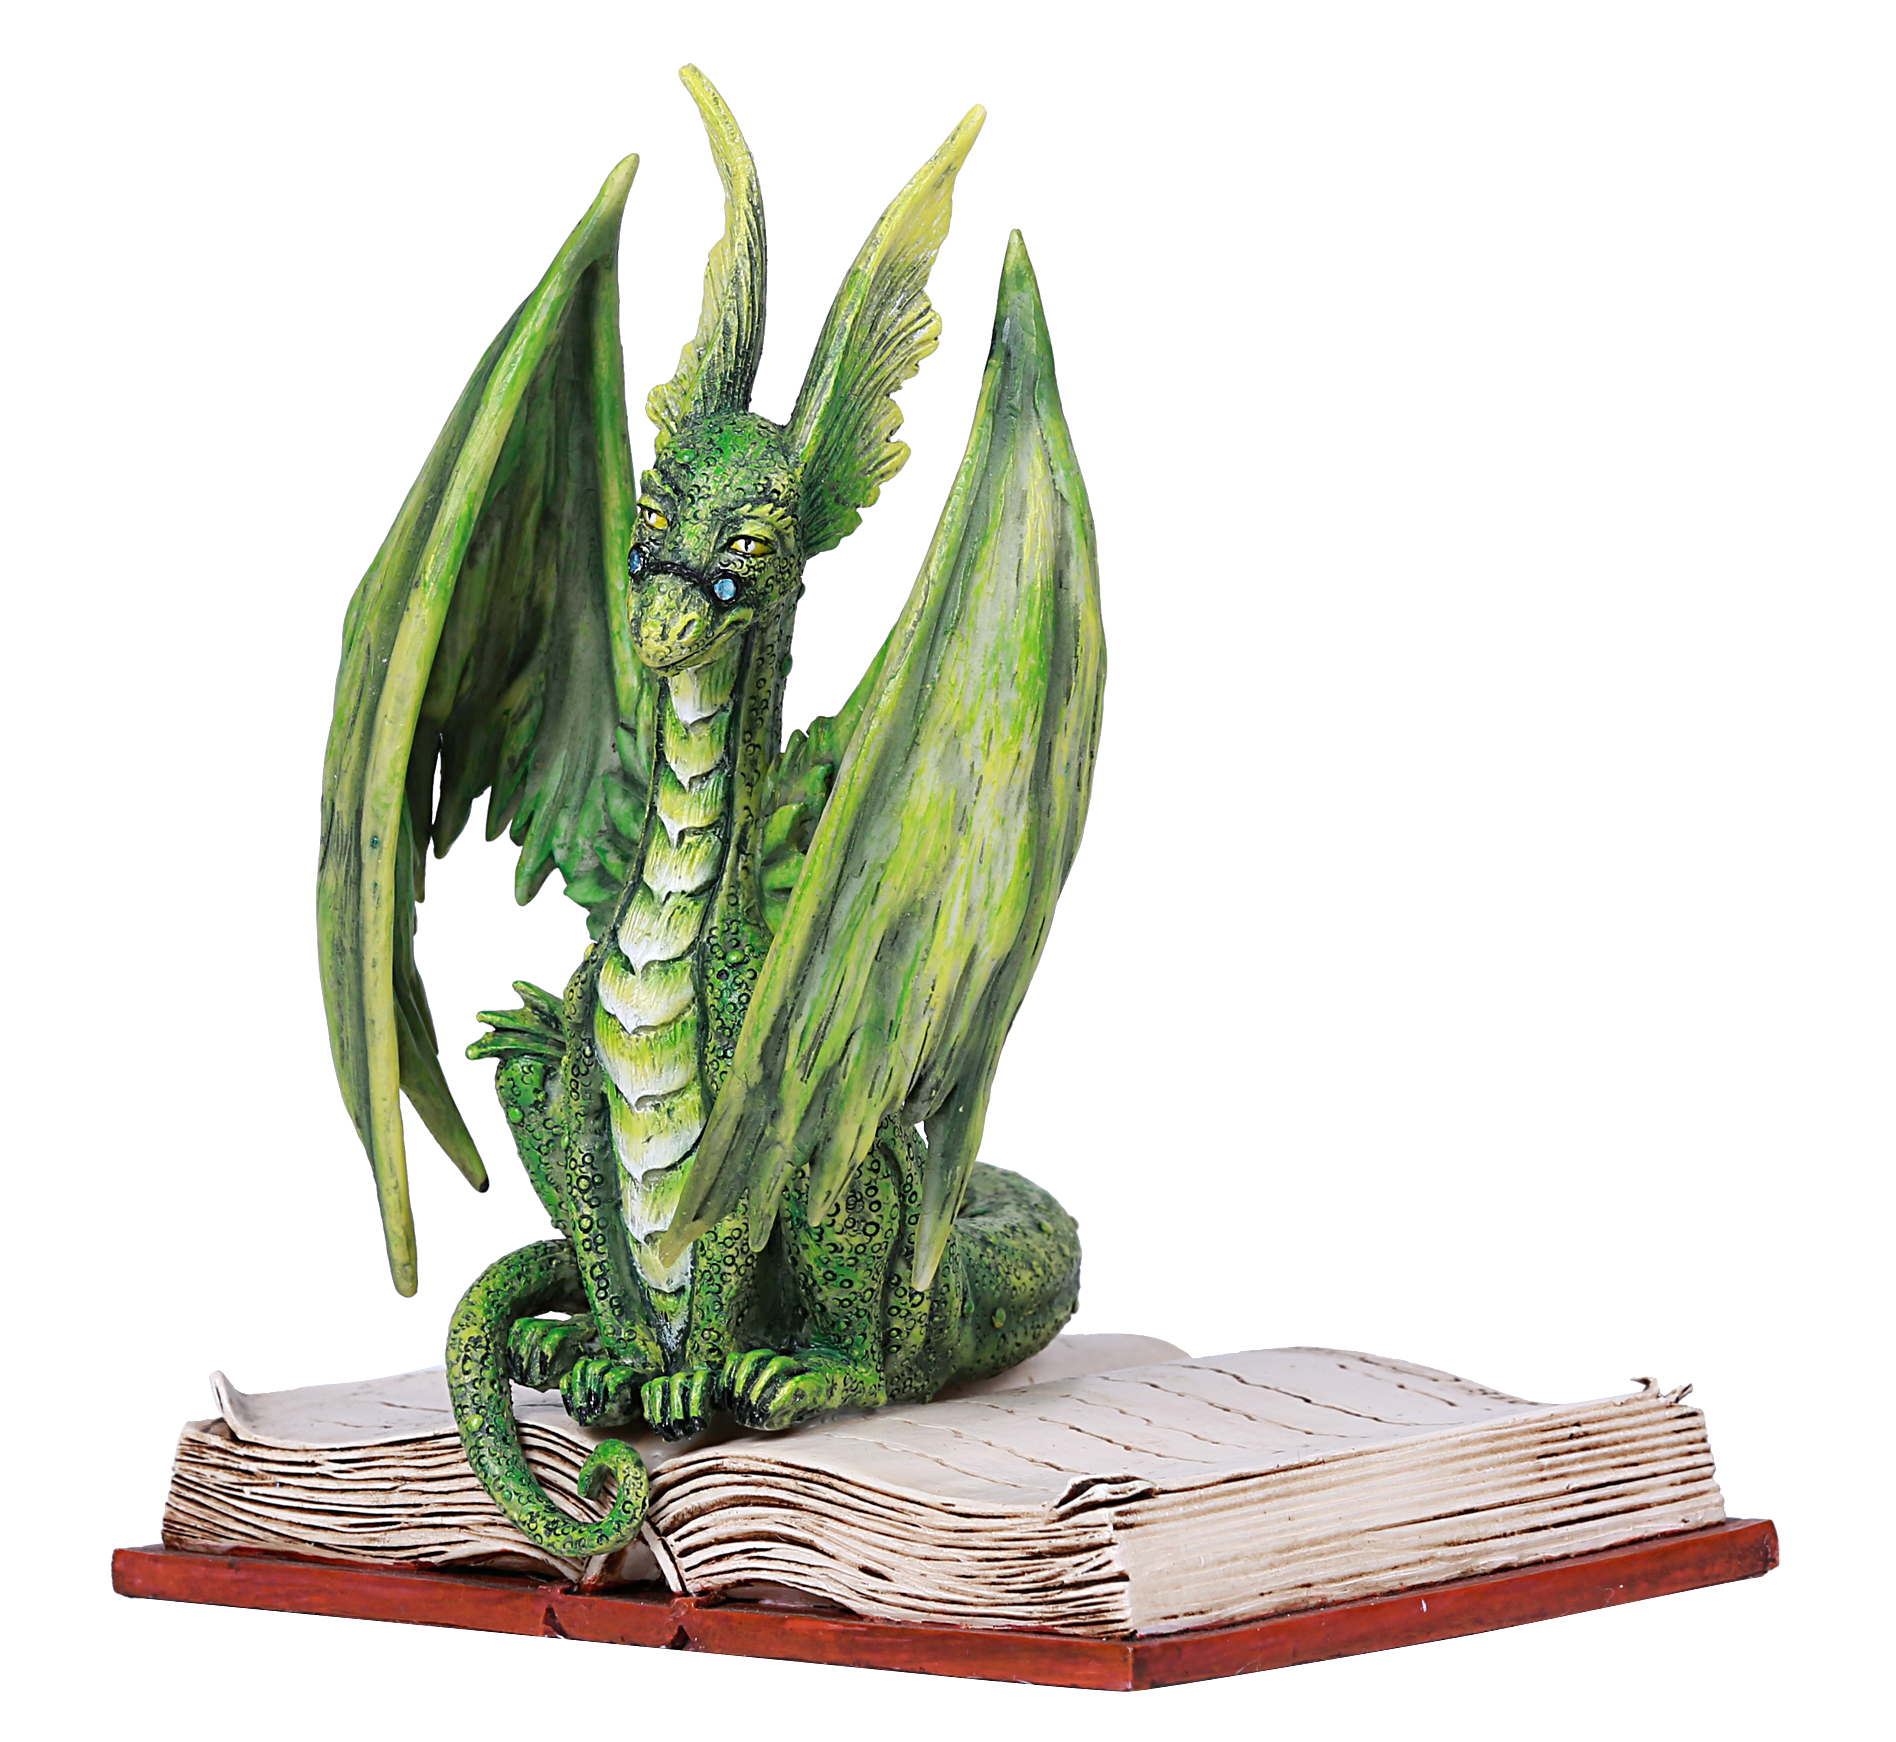 Scholar Dragon Text Book Statue by Amy Brown Professor Teaching University